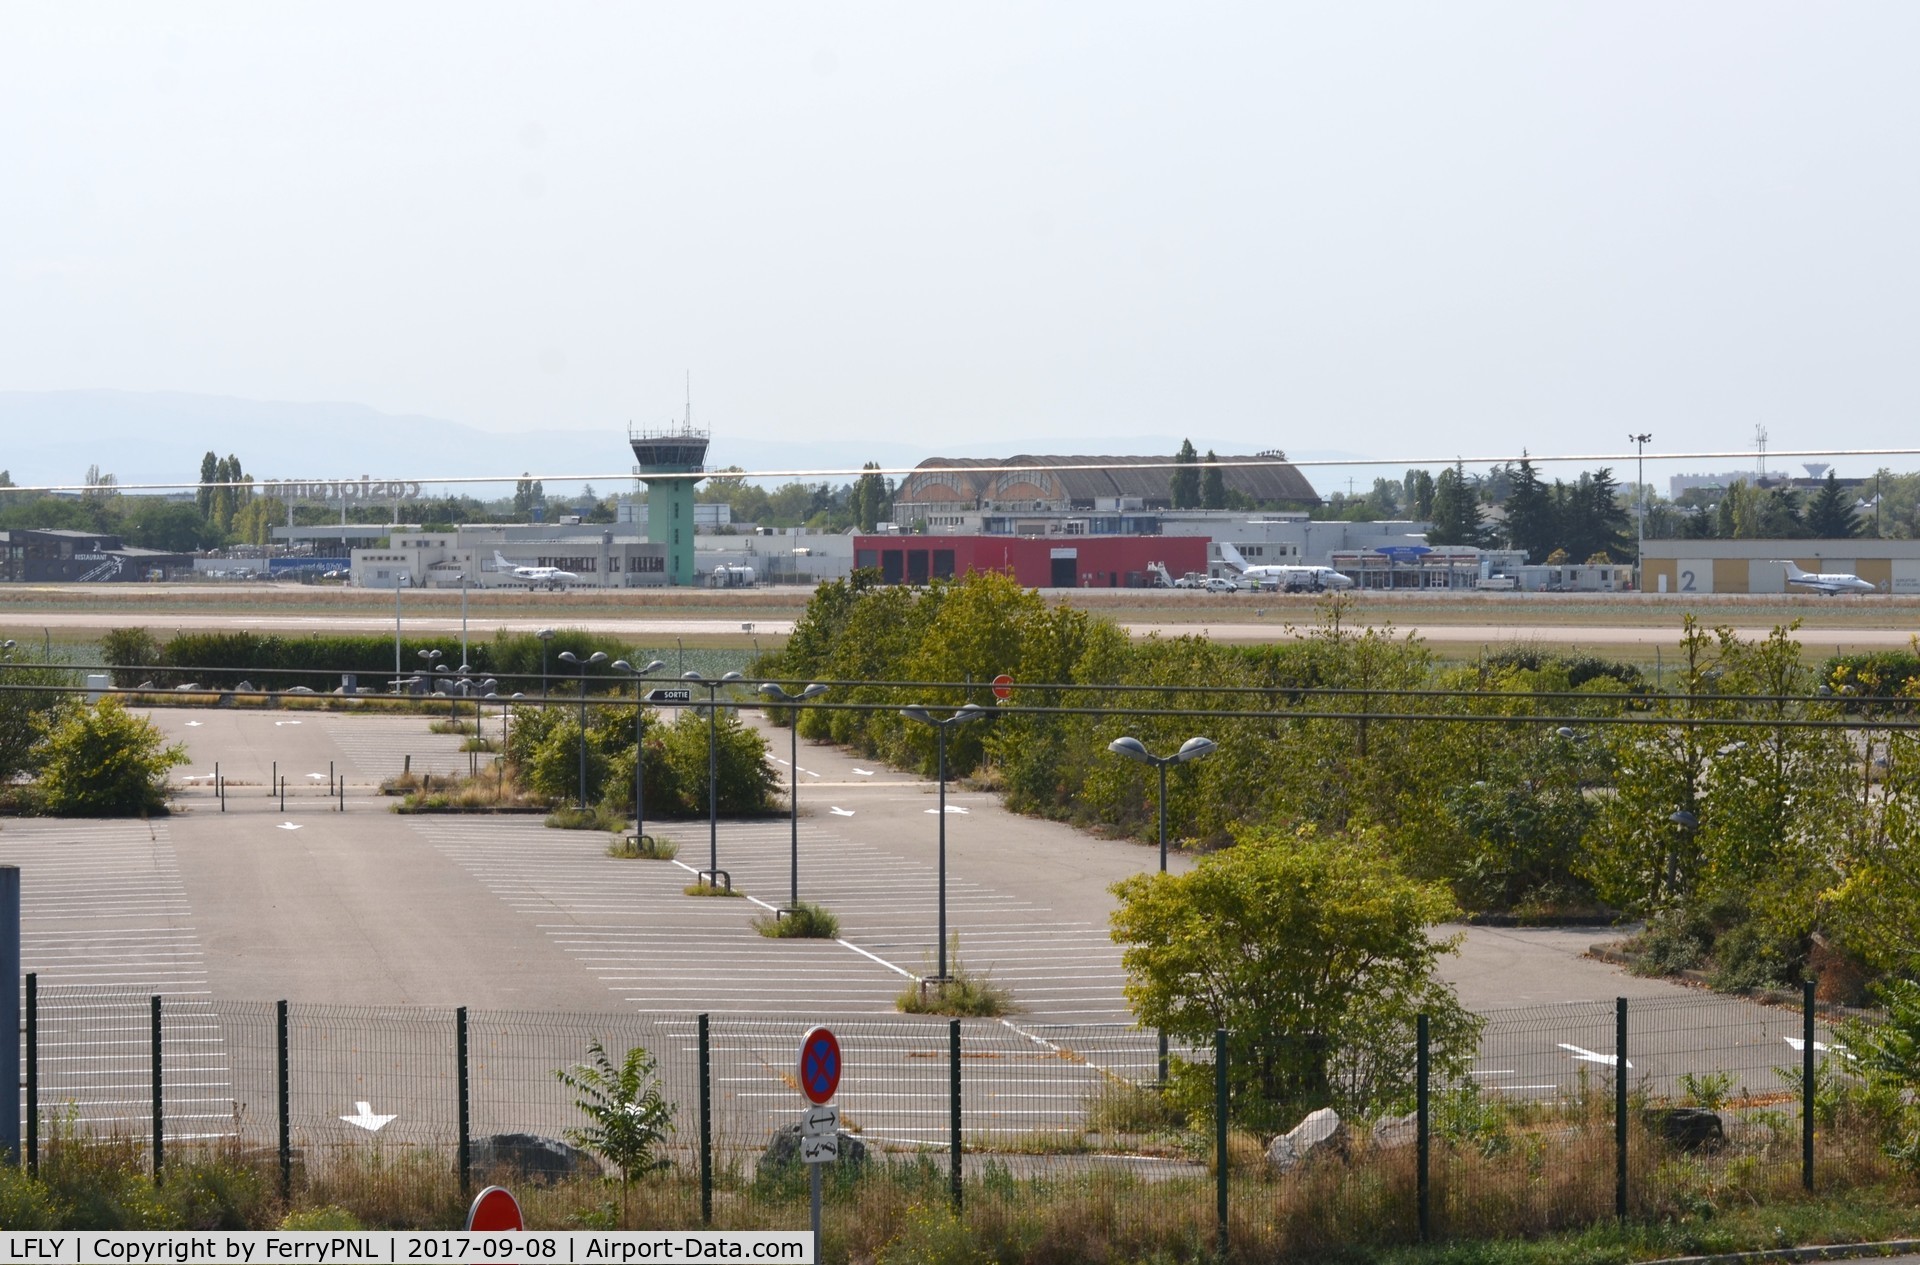 Lyon Bron Airport, Lyon France (LFLY) - Lyon Bron airport seen from the trade fair site.